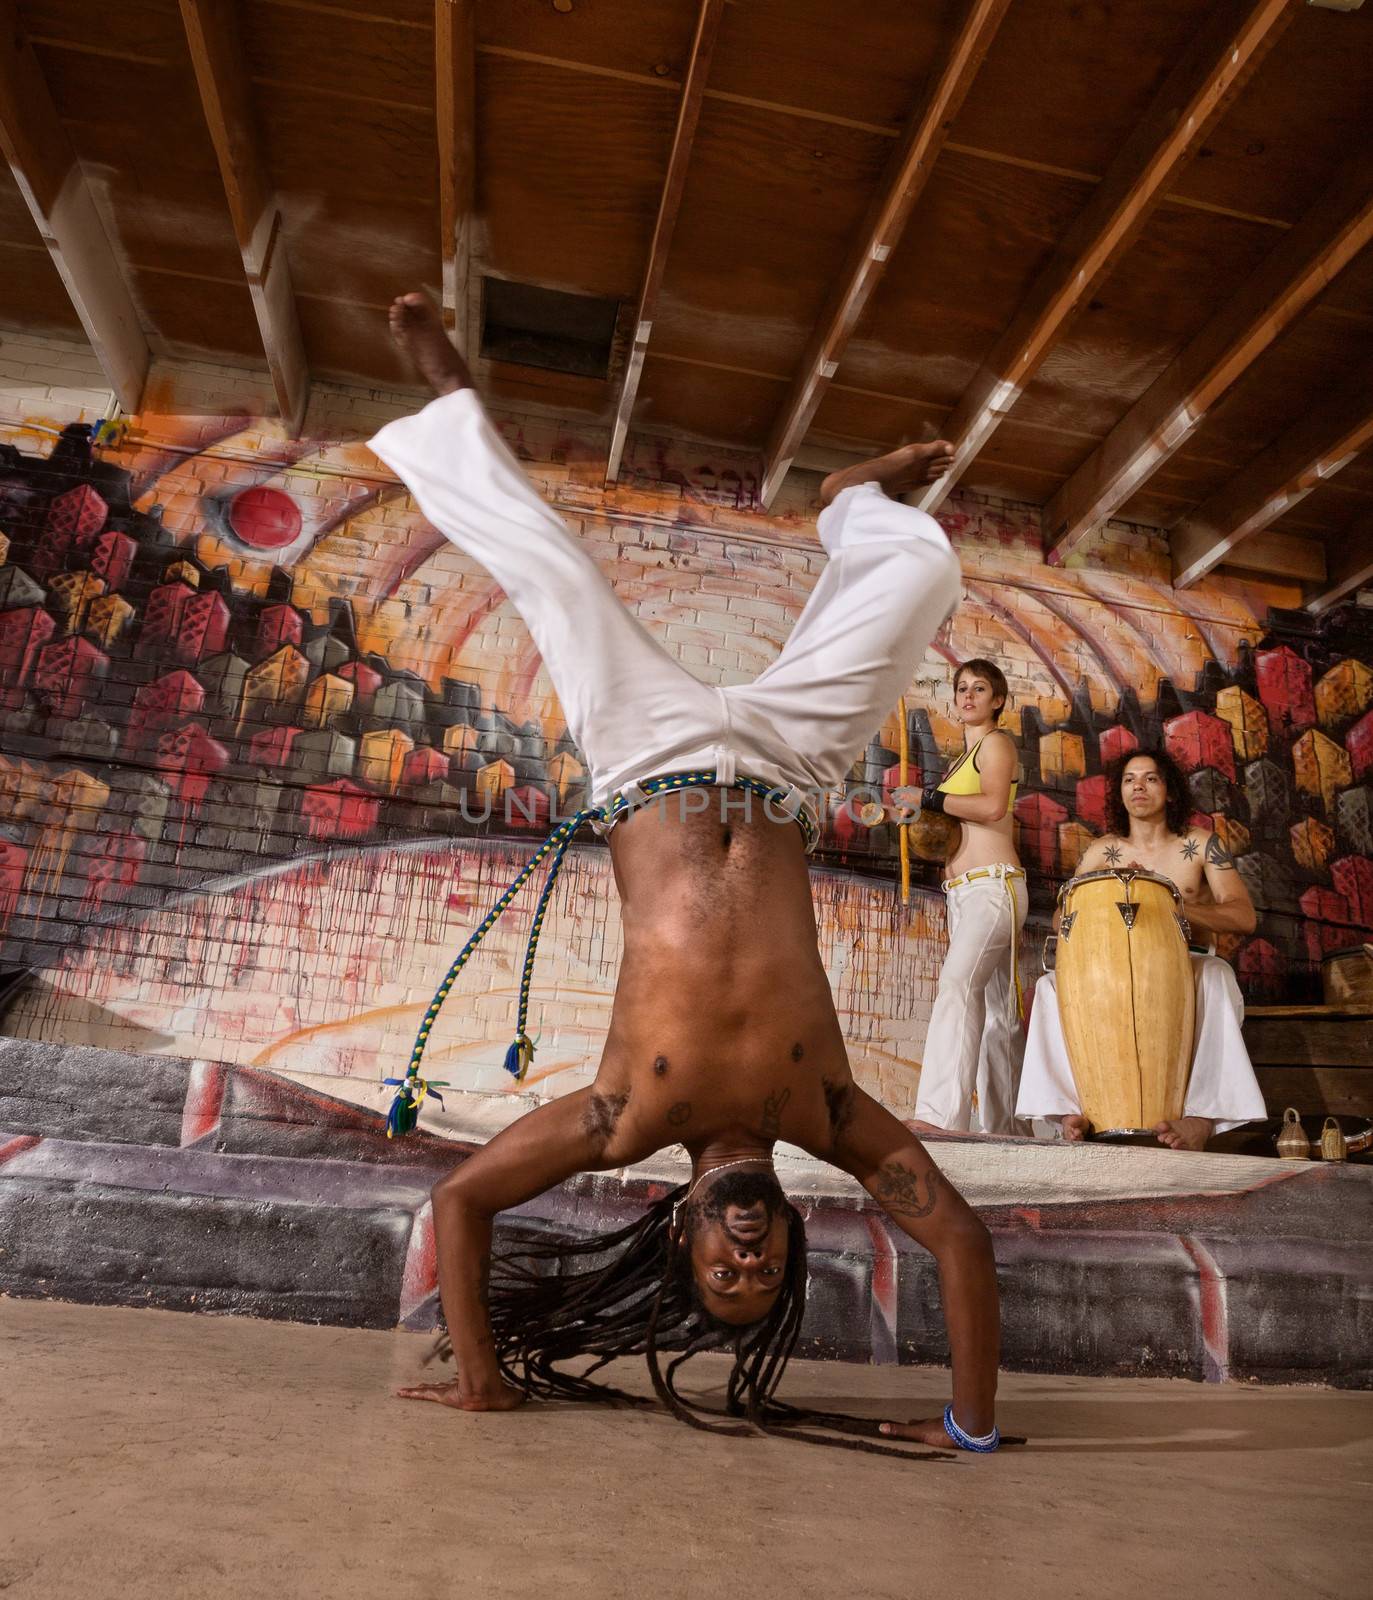 Capoeira performer with dreadlocks in handstand